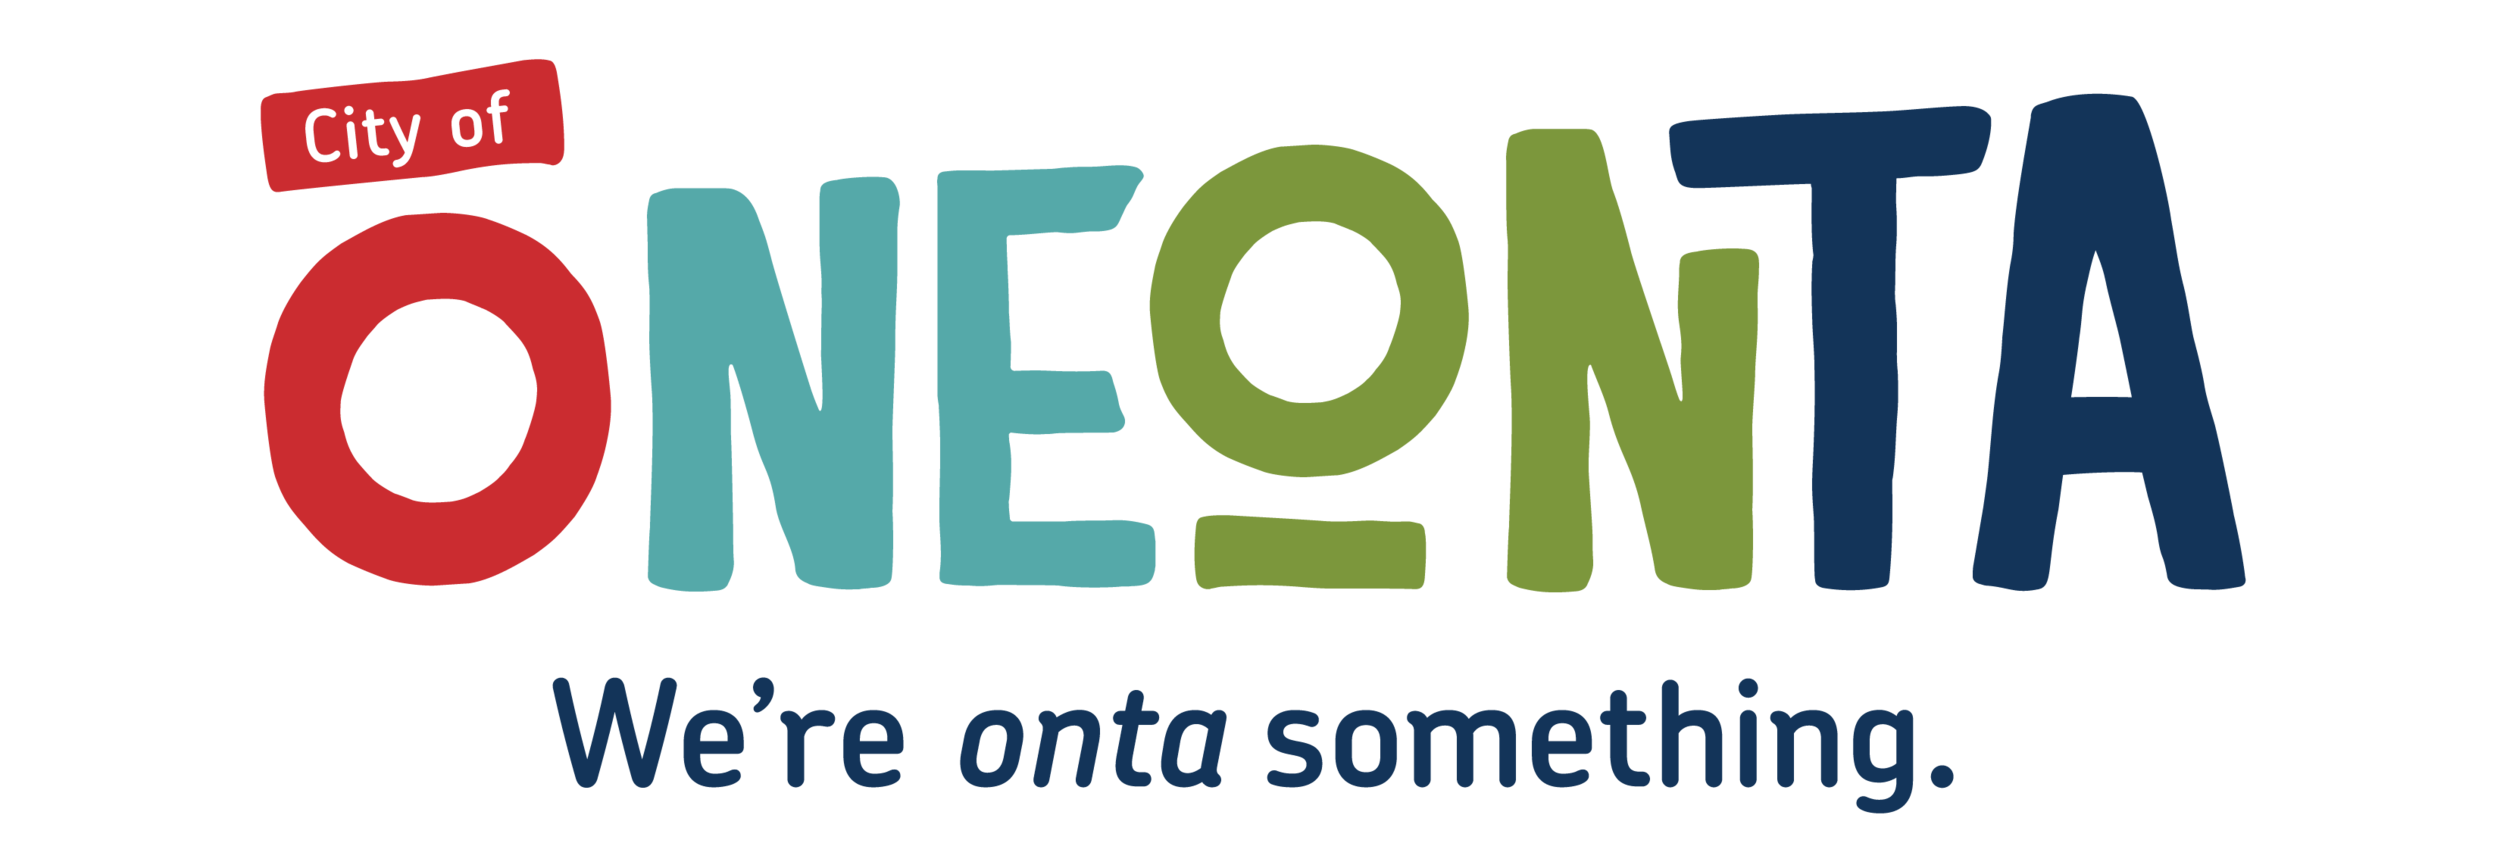 20190409_Oneonta-Logo_RGB.png